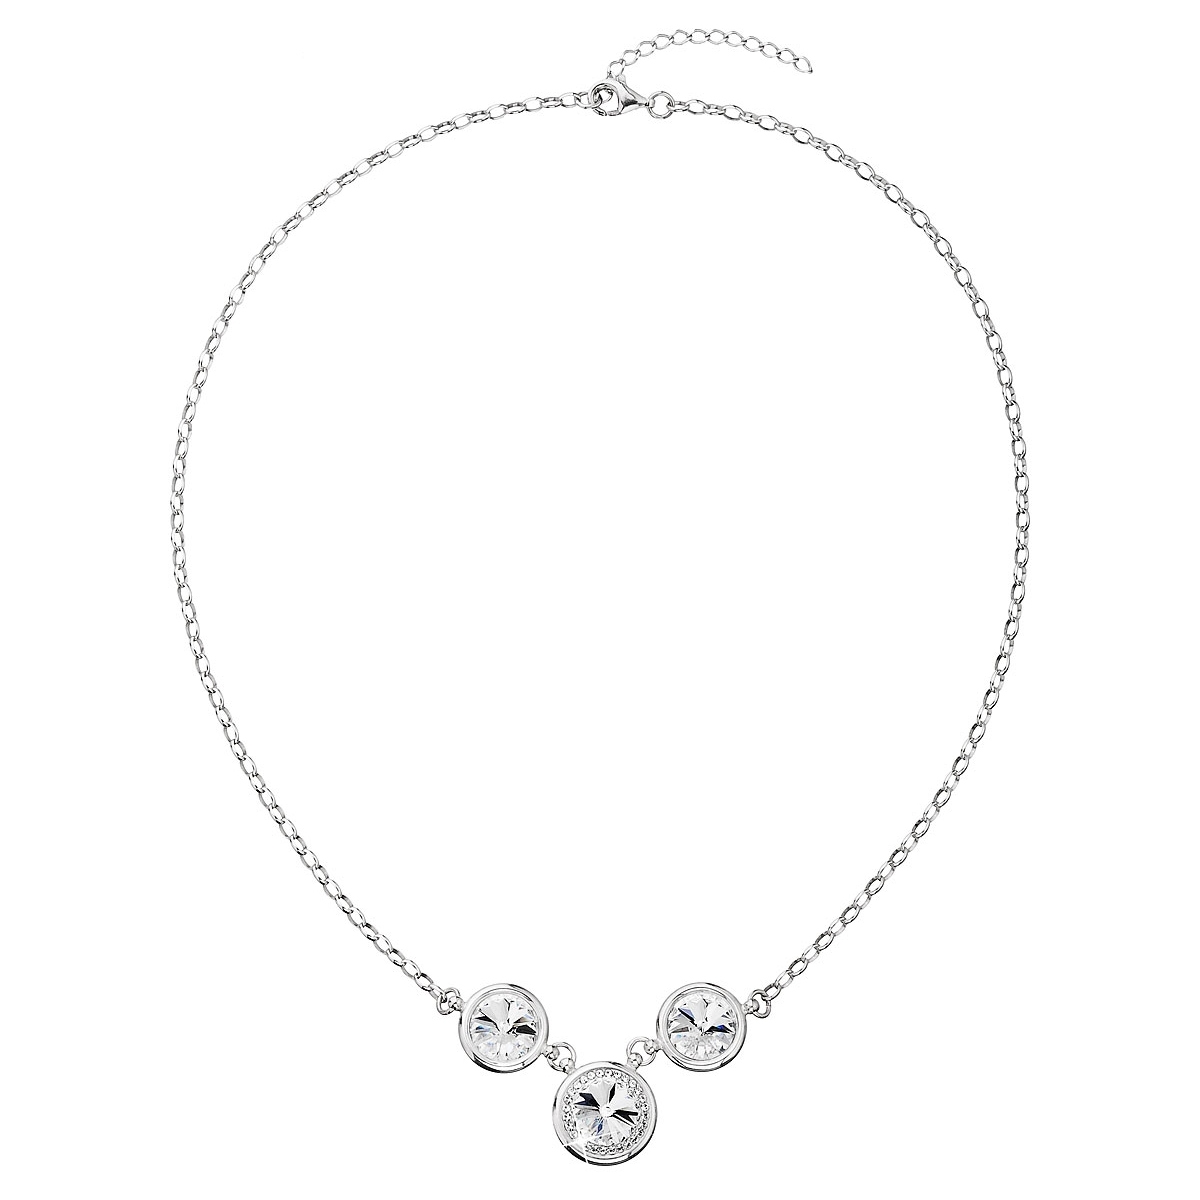 Strieborný náhrdelník s kameňmi Crystals from Swarovski ®